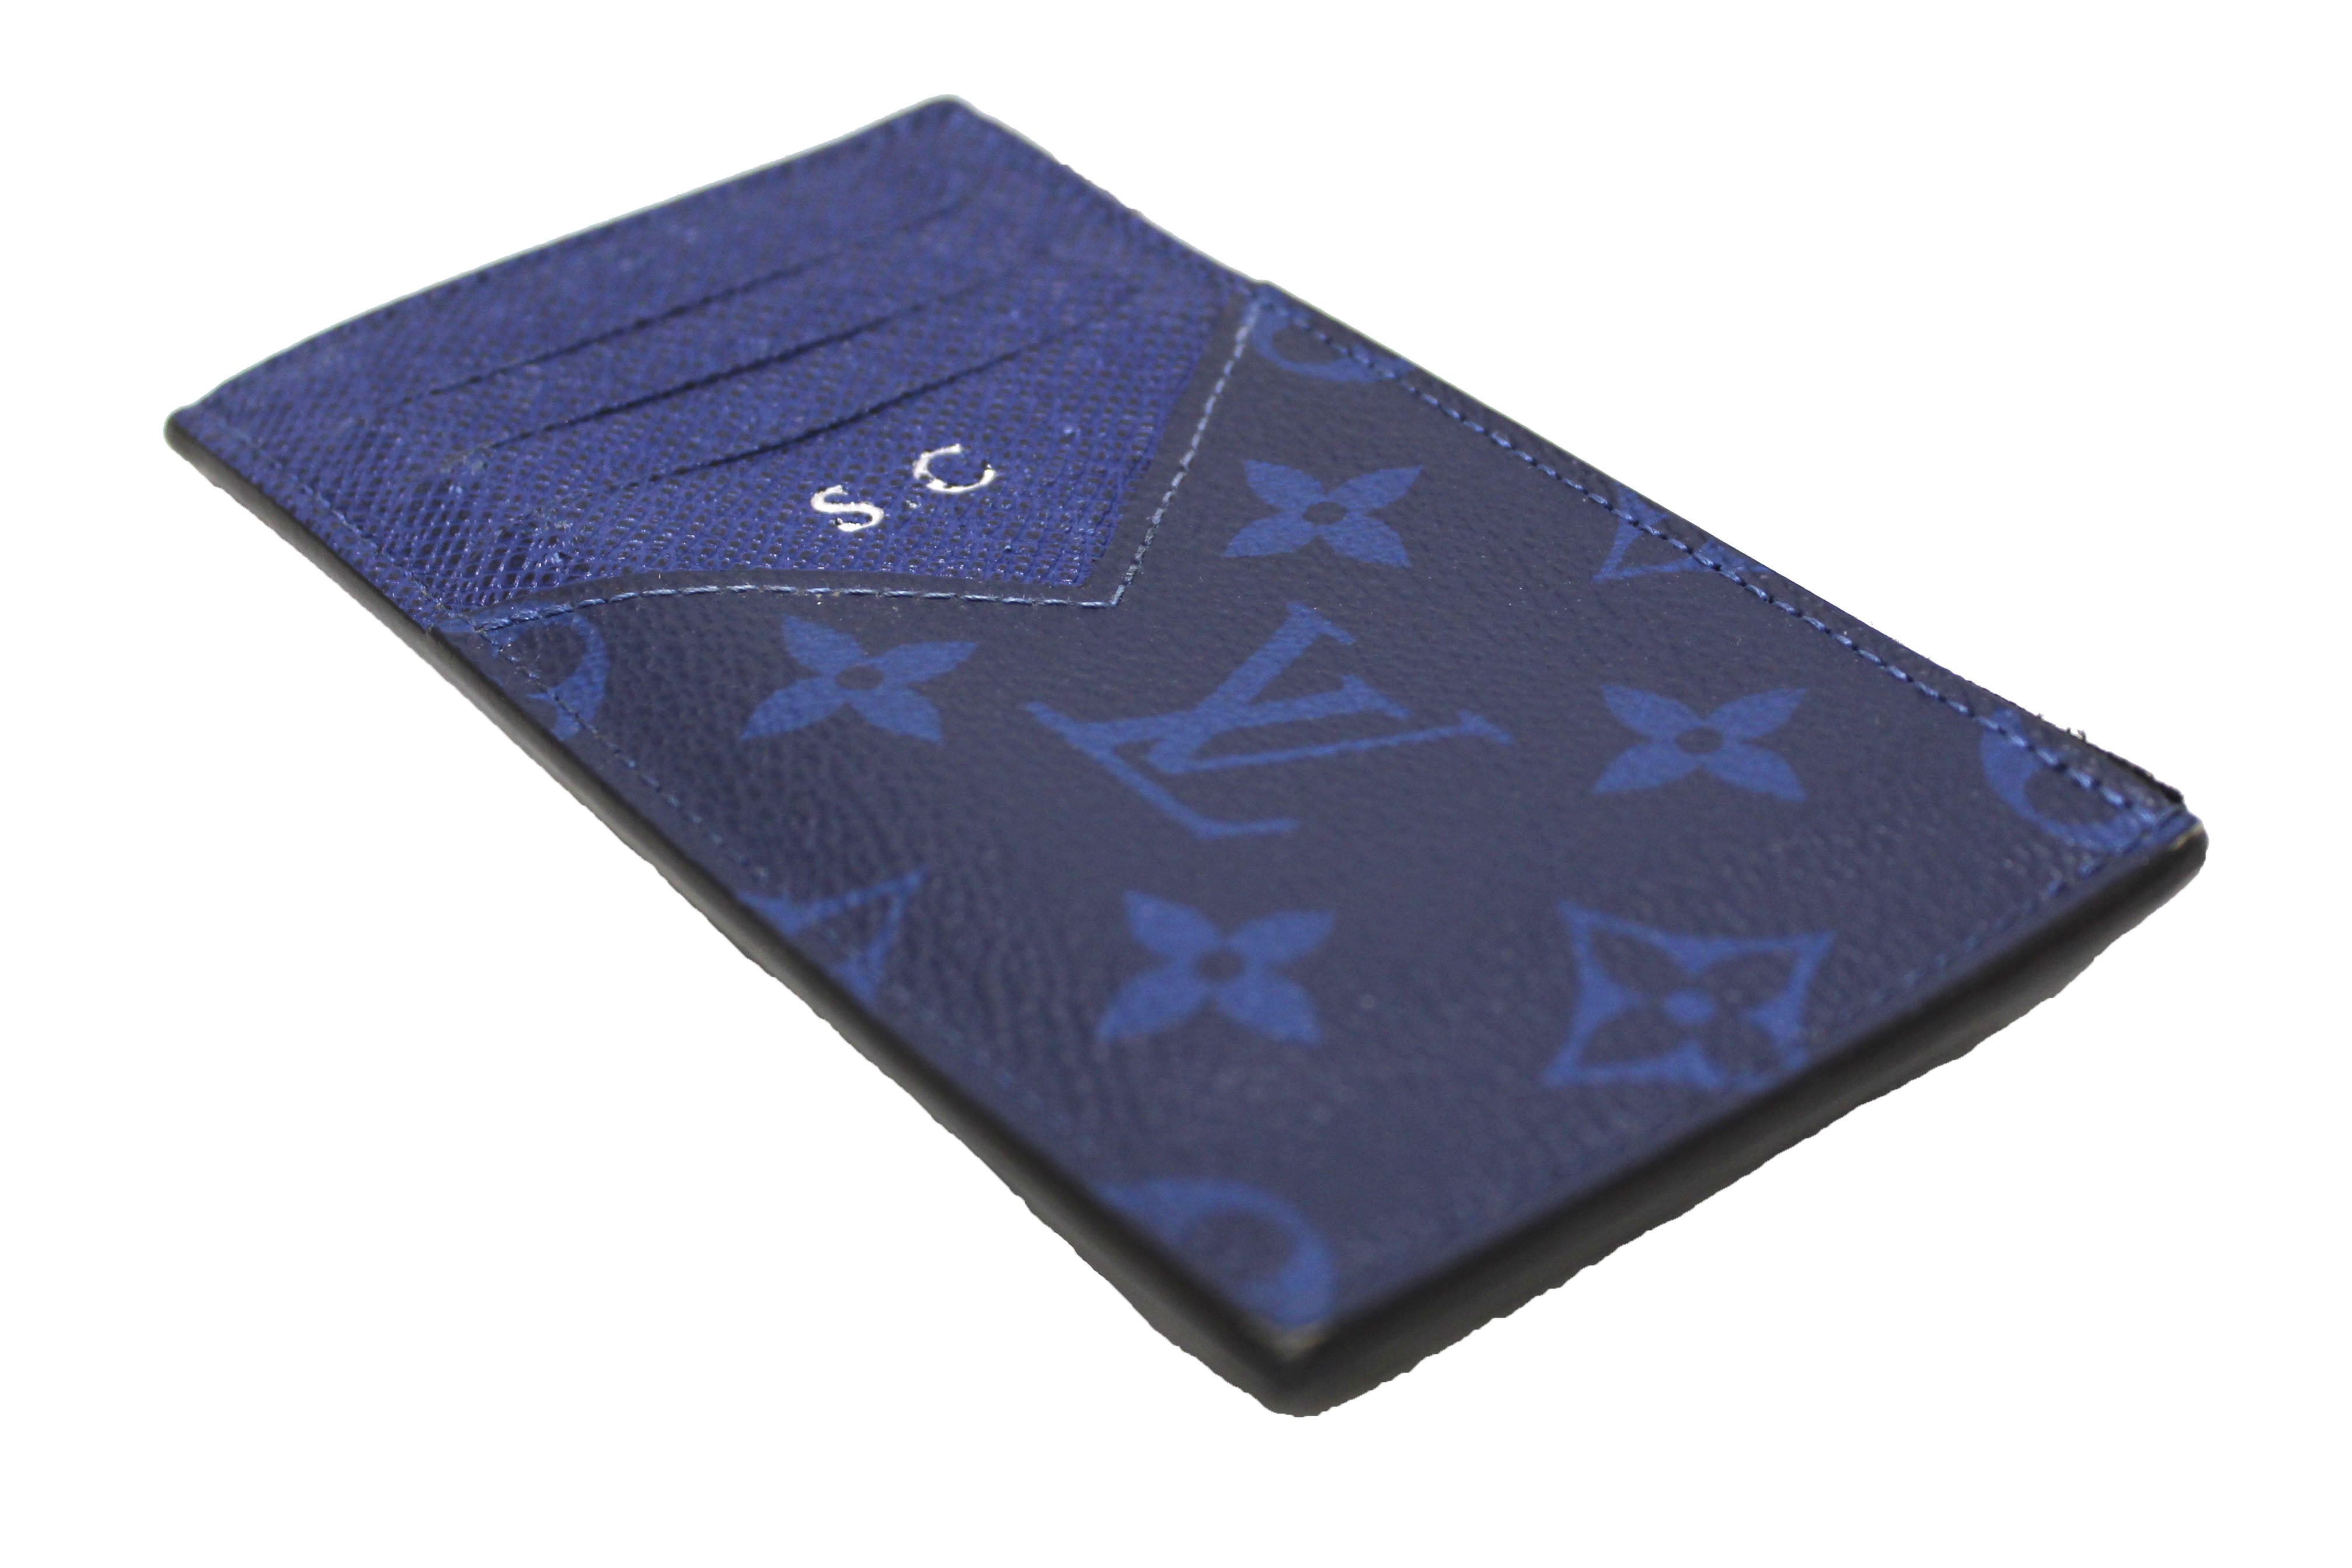 Authentic Louis Vuitton Blue Monogram Canvas/Taiga Leather Coin